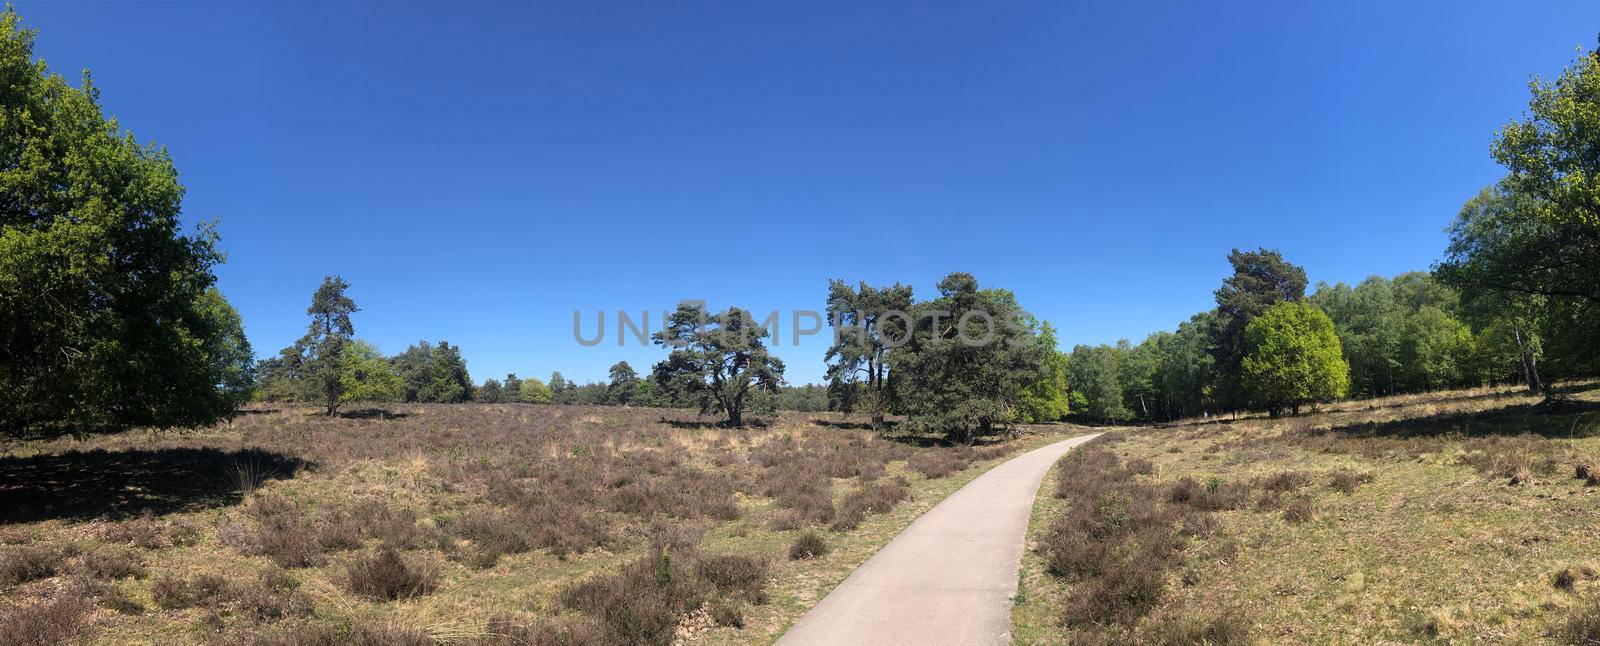 Panorama from a path through National Park De Hoge Veluwe in Gelderland, The Netherlands